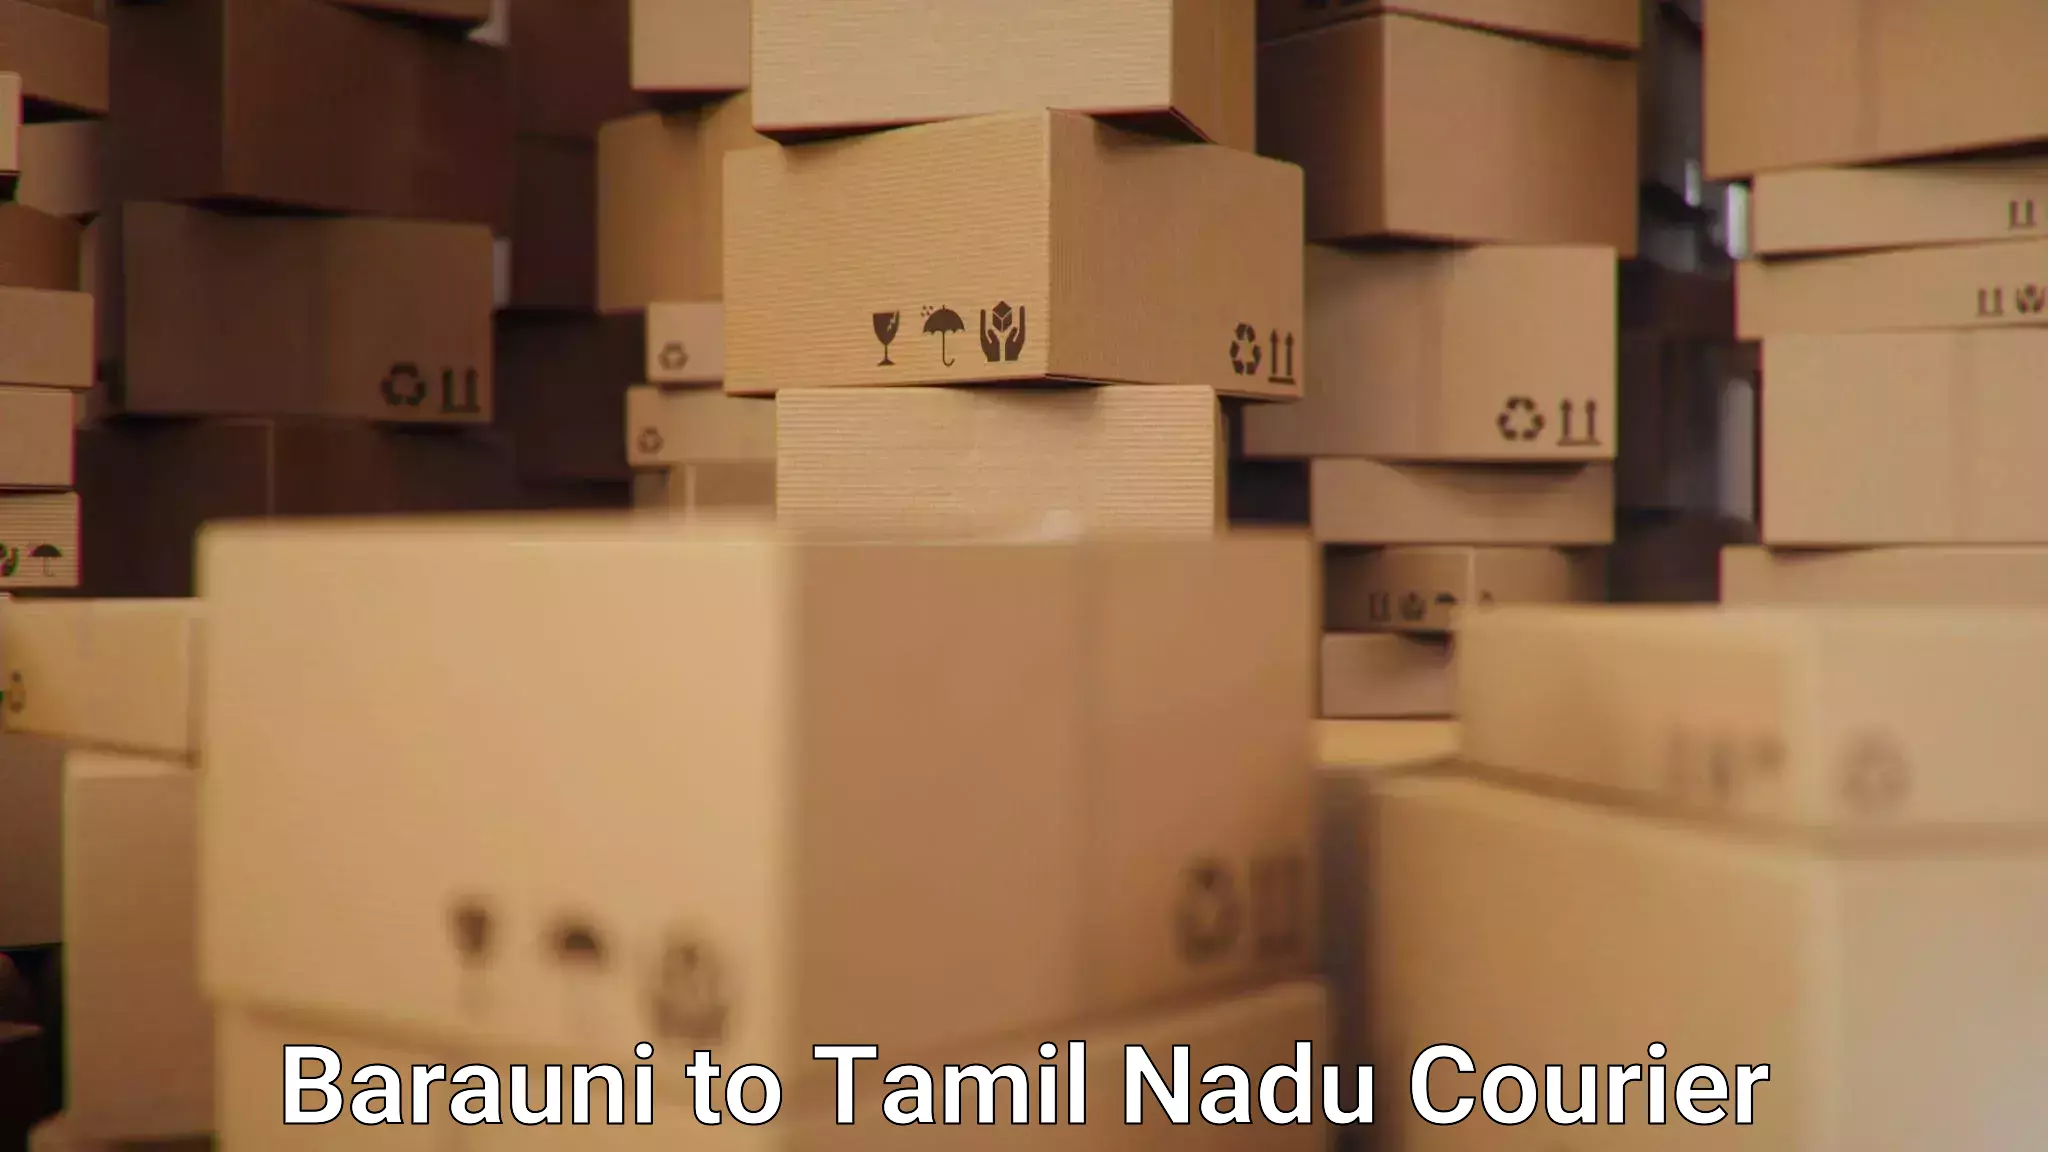 Supply chain delivery Barauni to Tirukalukundram